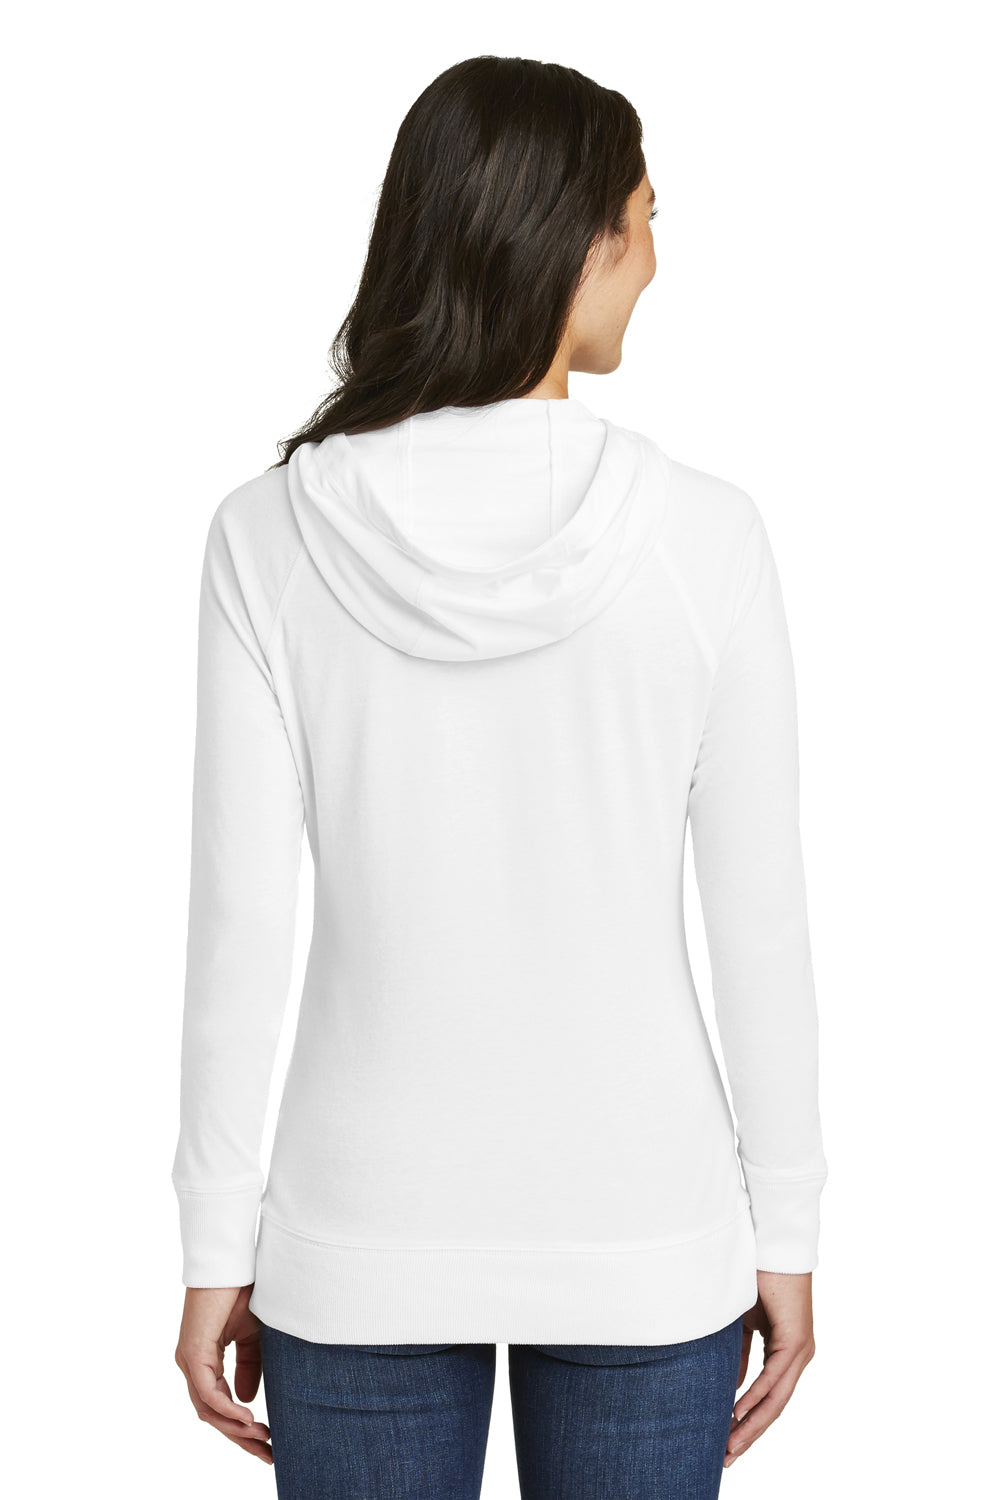 New Era LNEA122 Womens Sueded Full Zip Hooded Sweatshirt Hoodie White Back